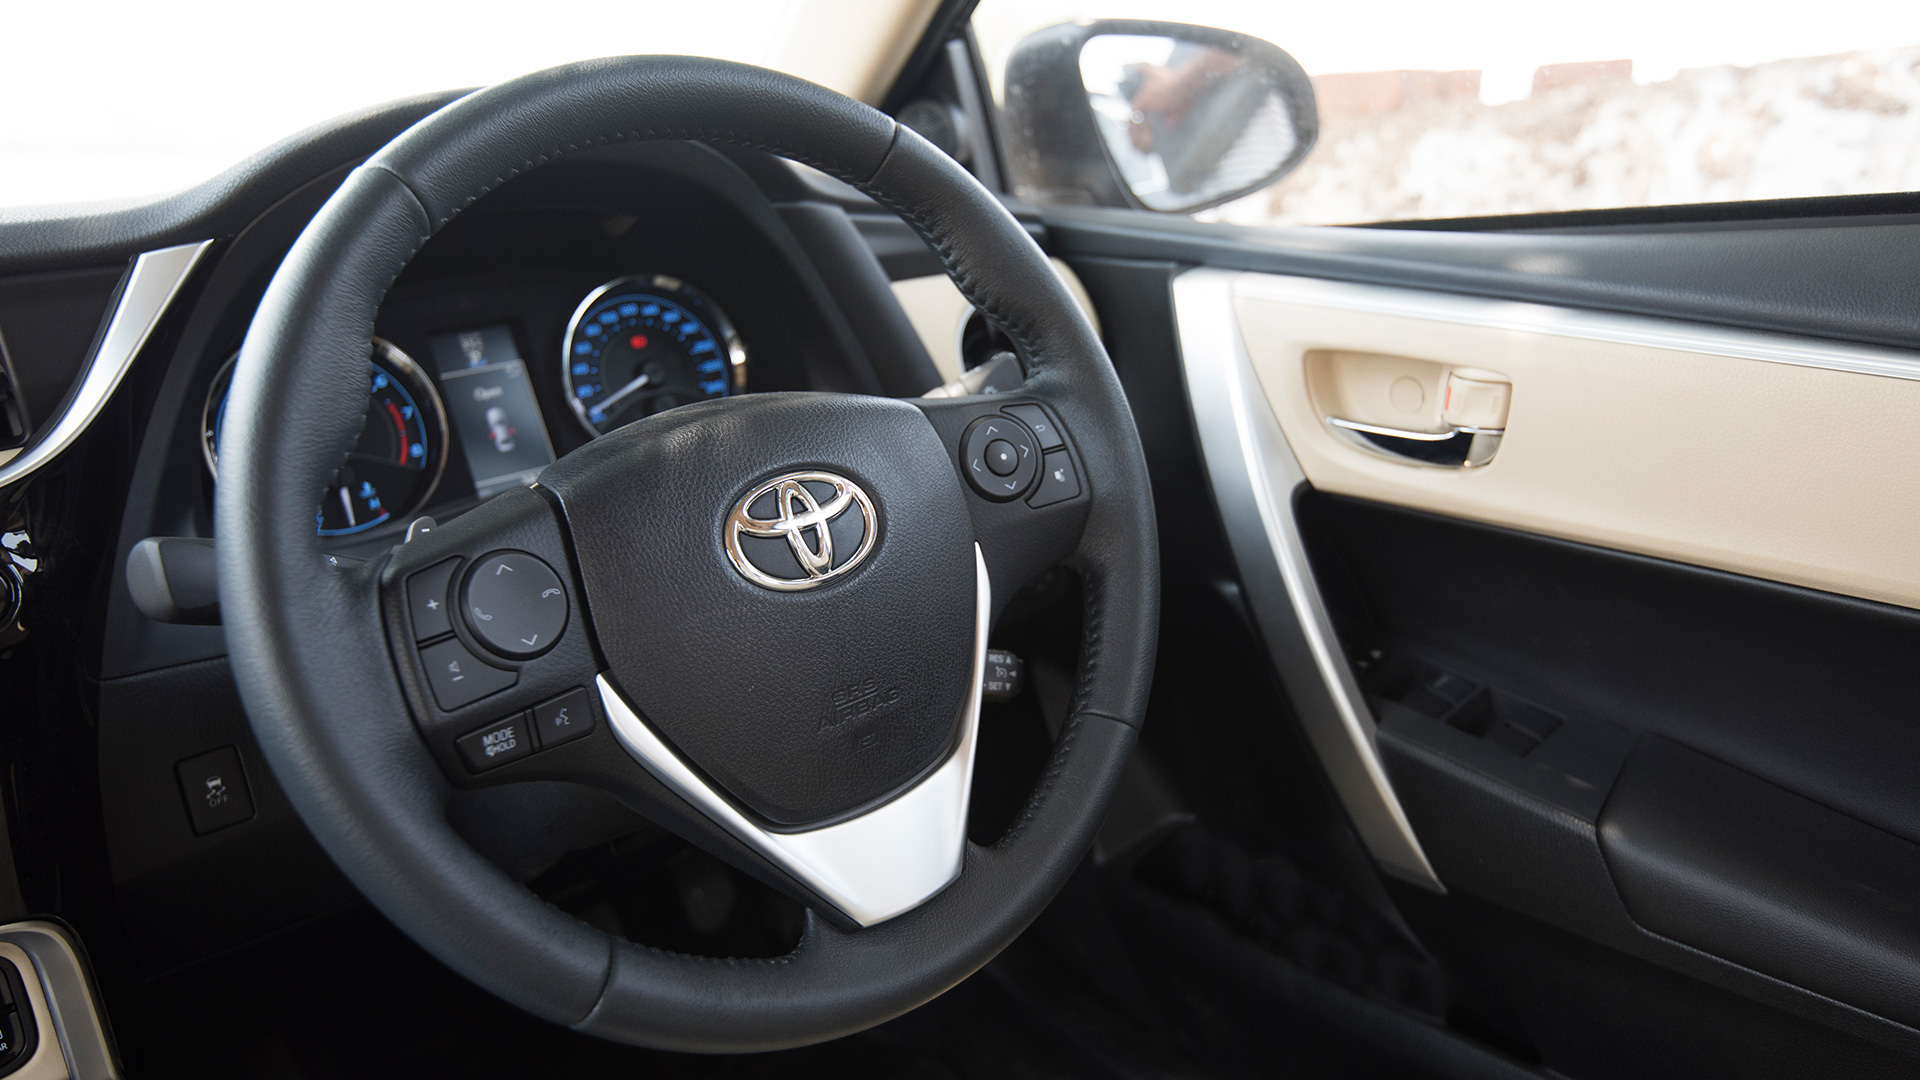 Toyota Corolla Altis 2017 VL (CVT) Interior